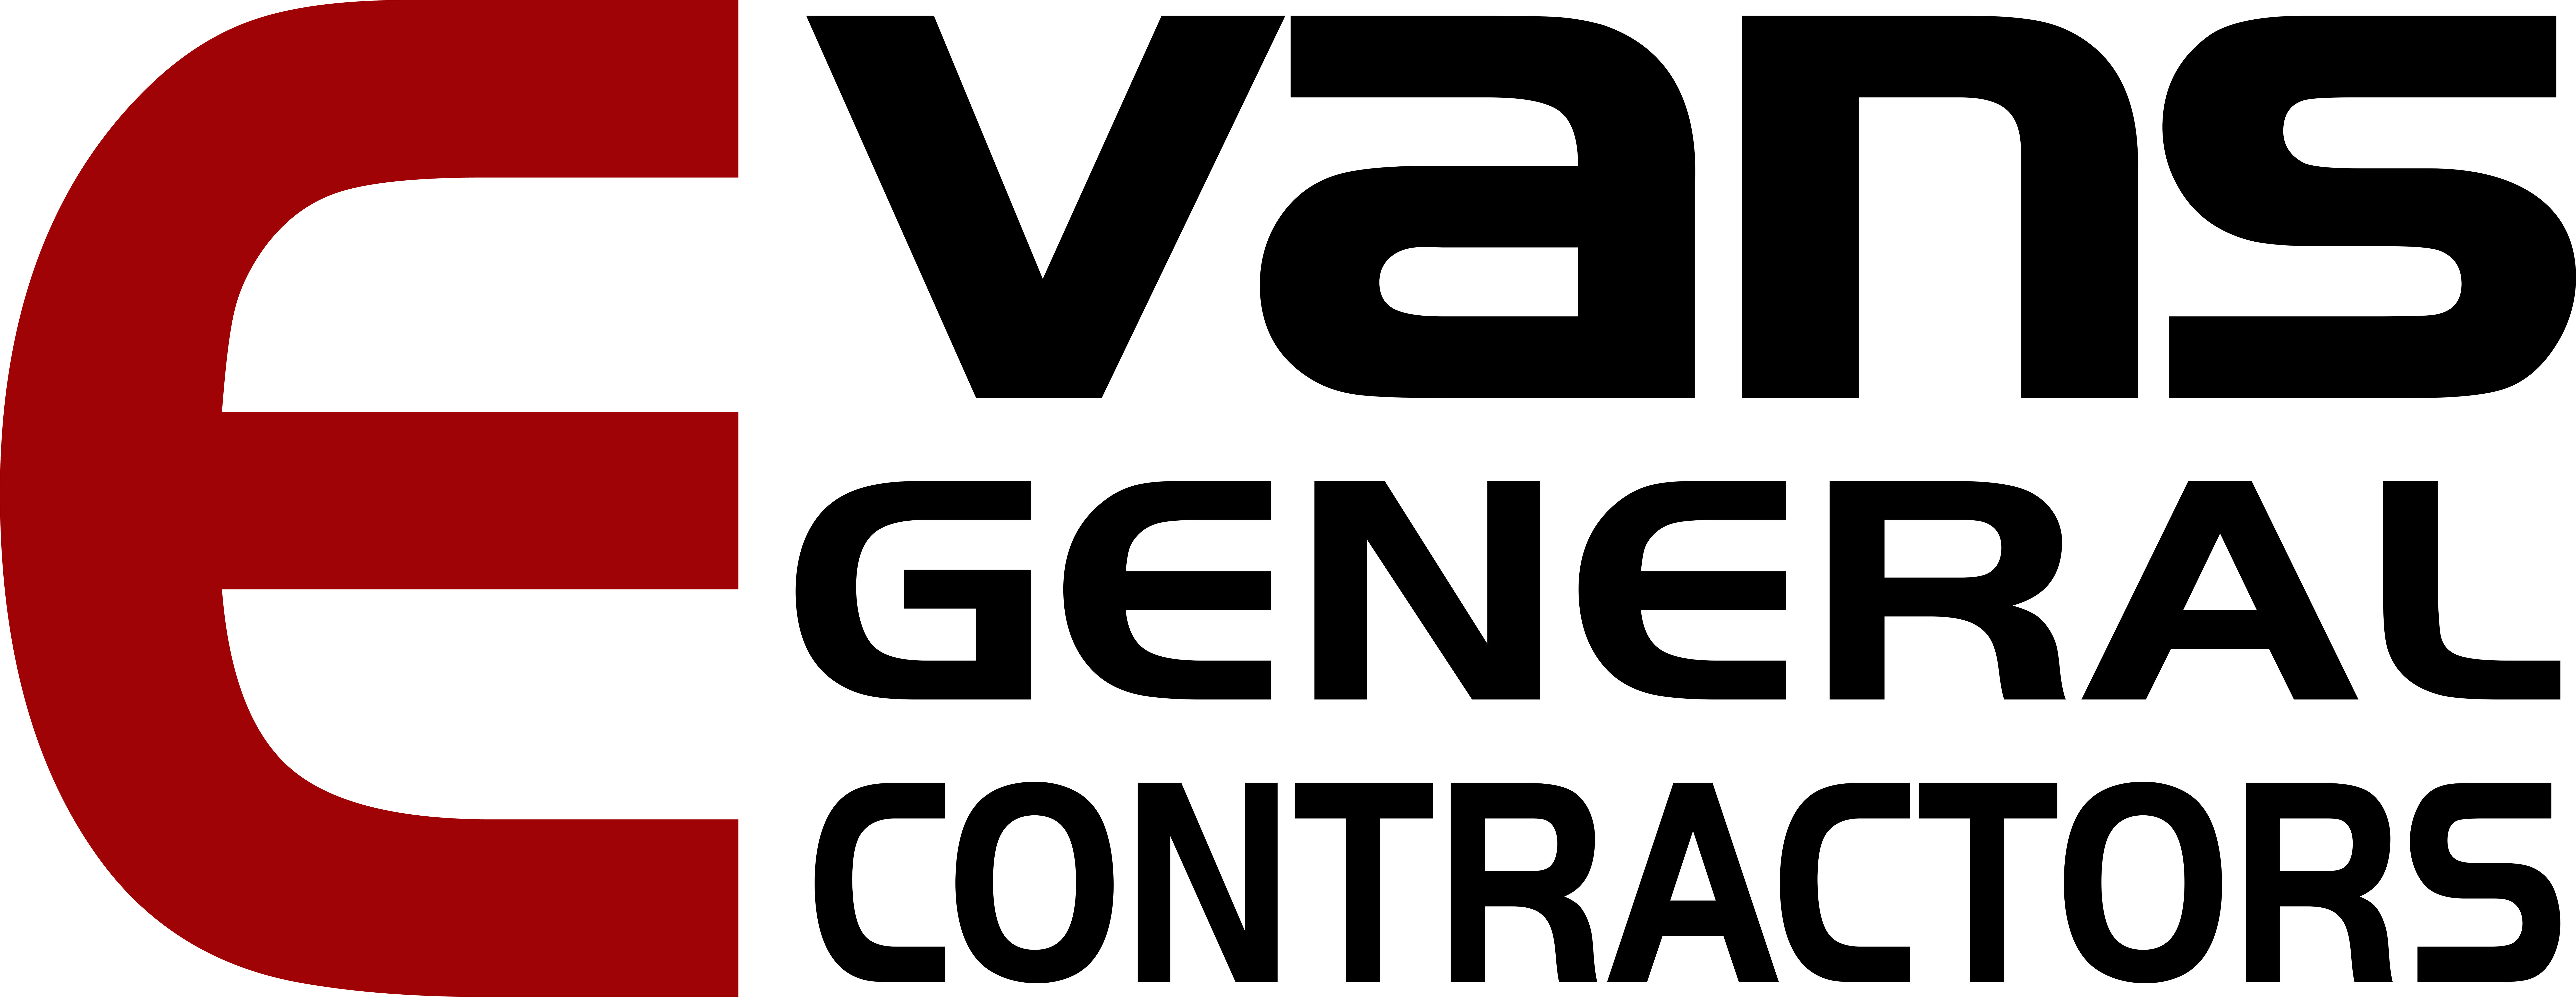 Contractors Logo - Evans General Contractors – Design/Build, General Contracting ...